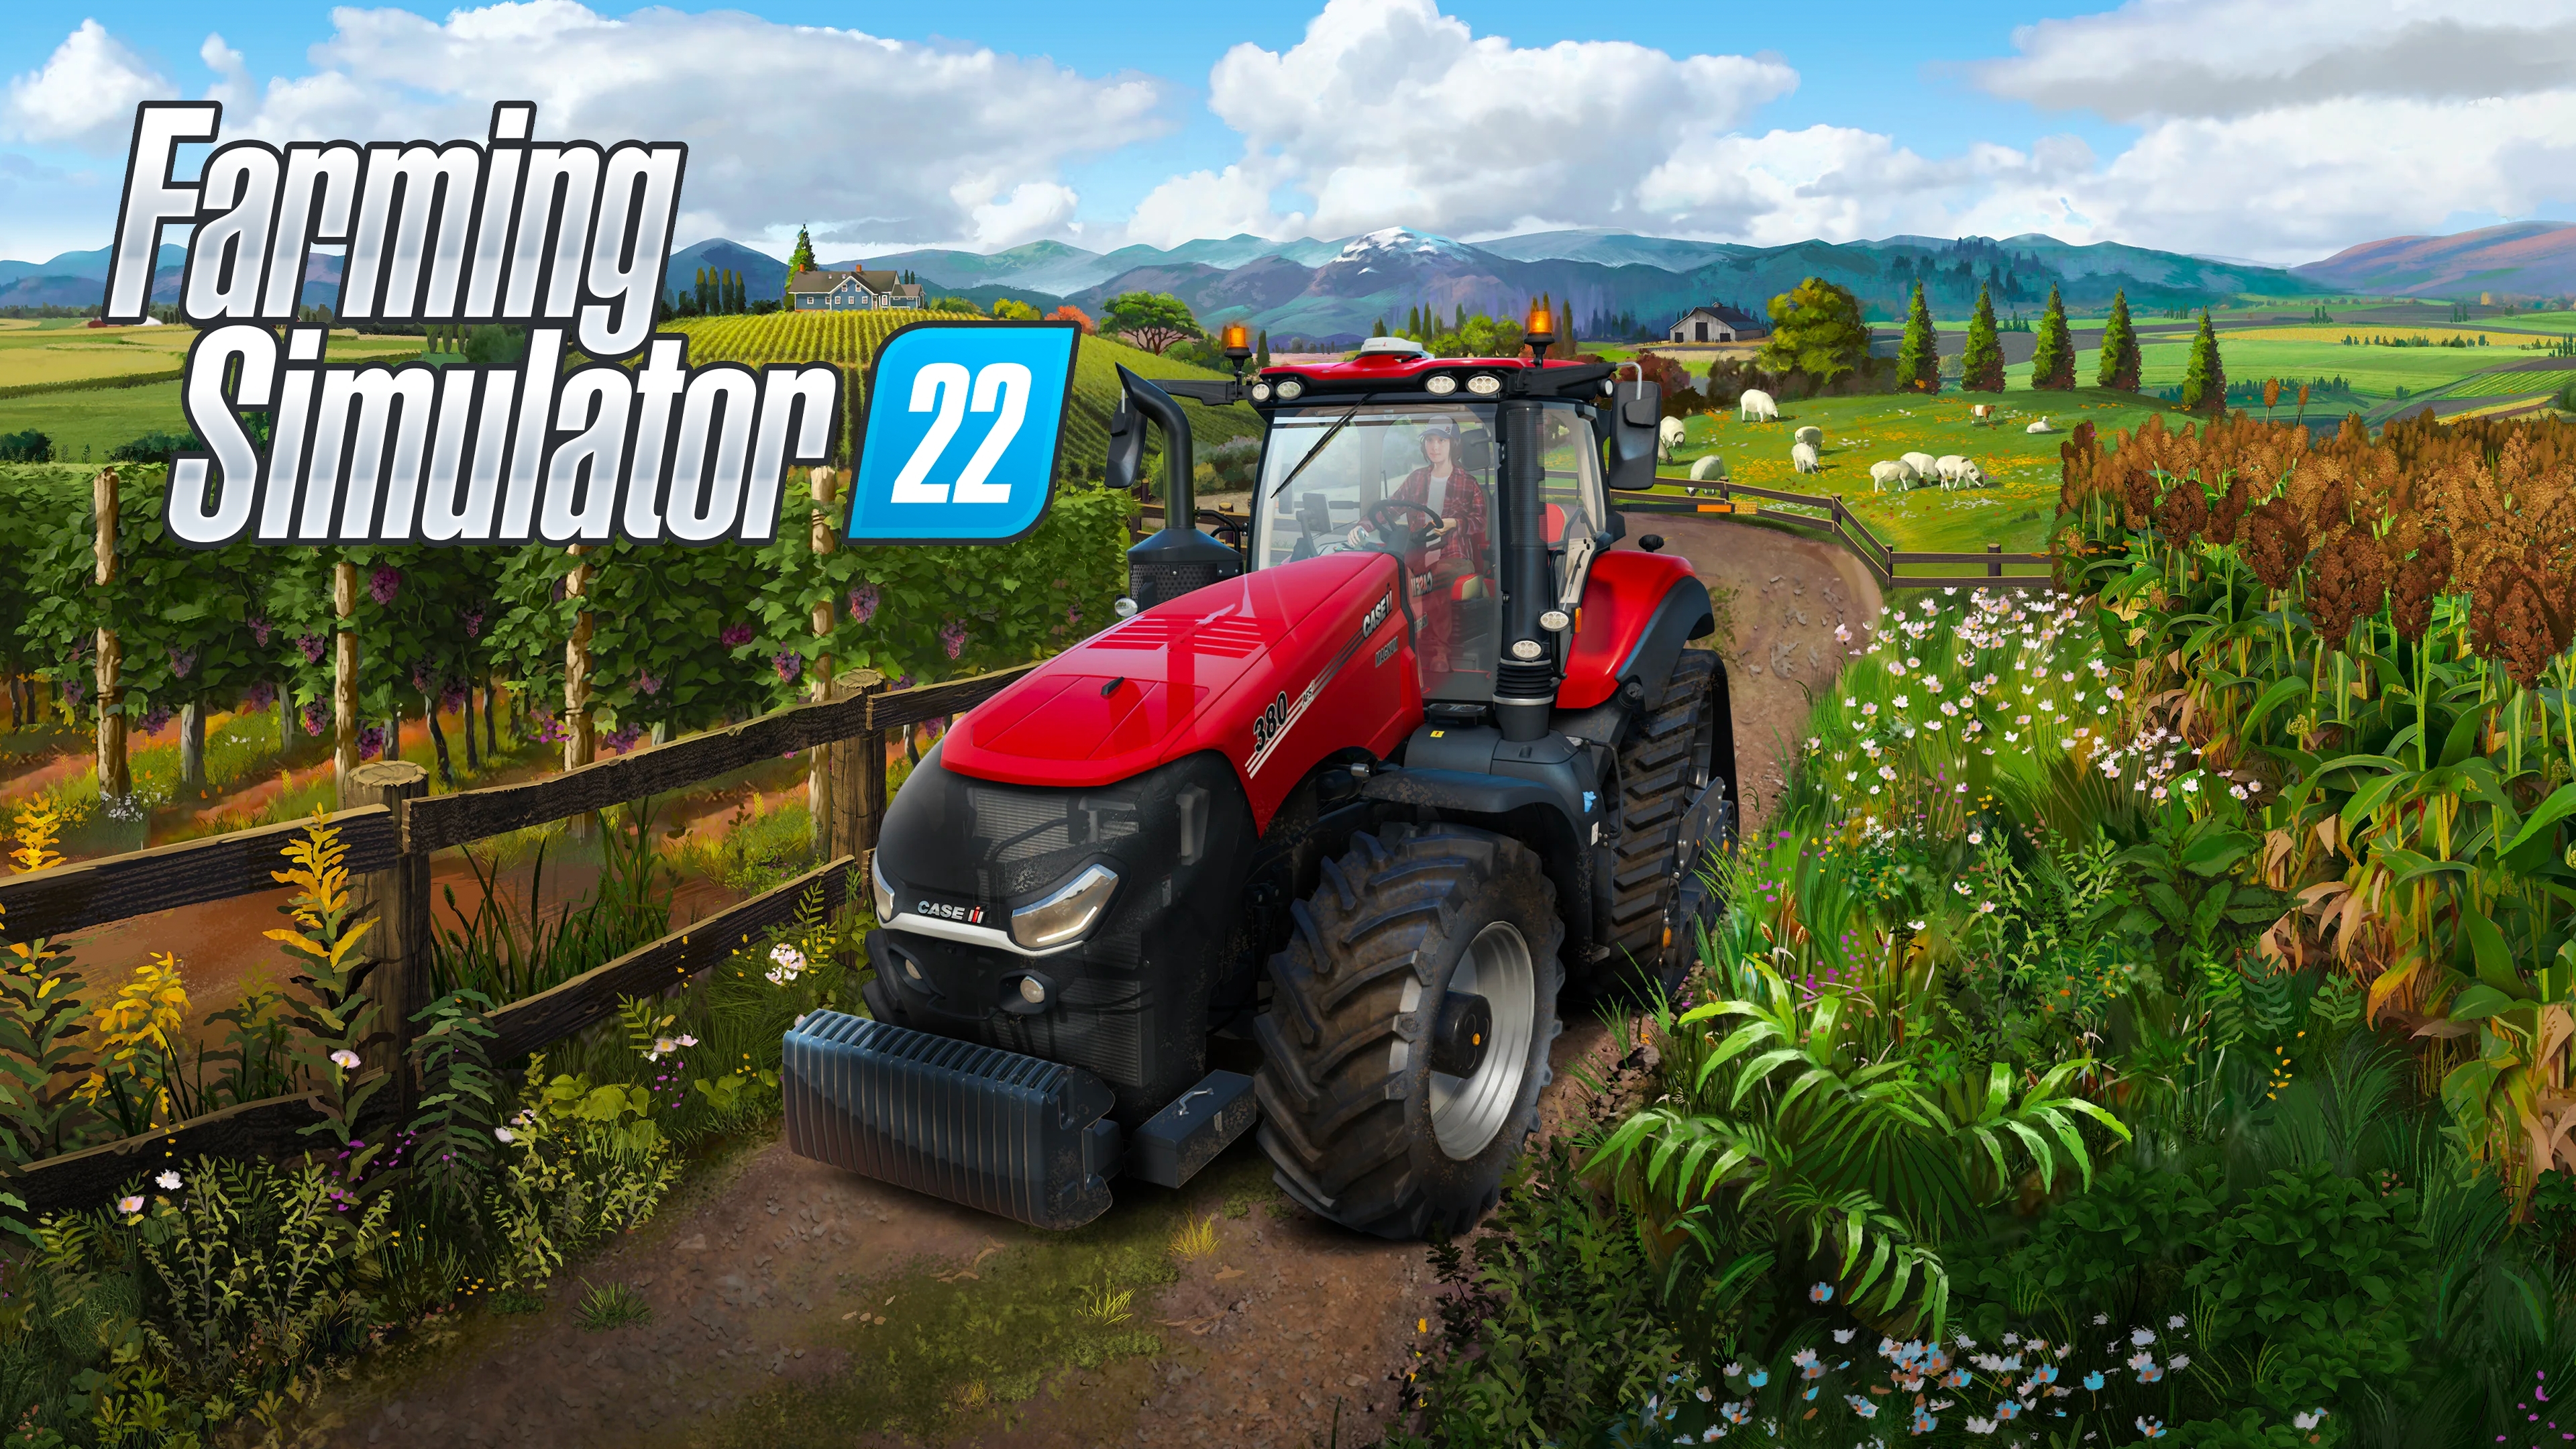 Kaufe Farming Simulator 22 Steam